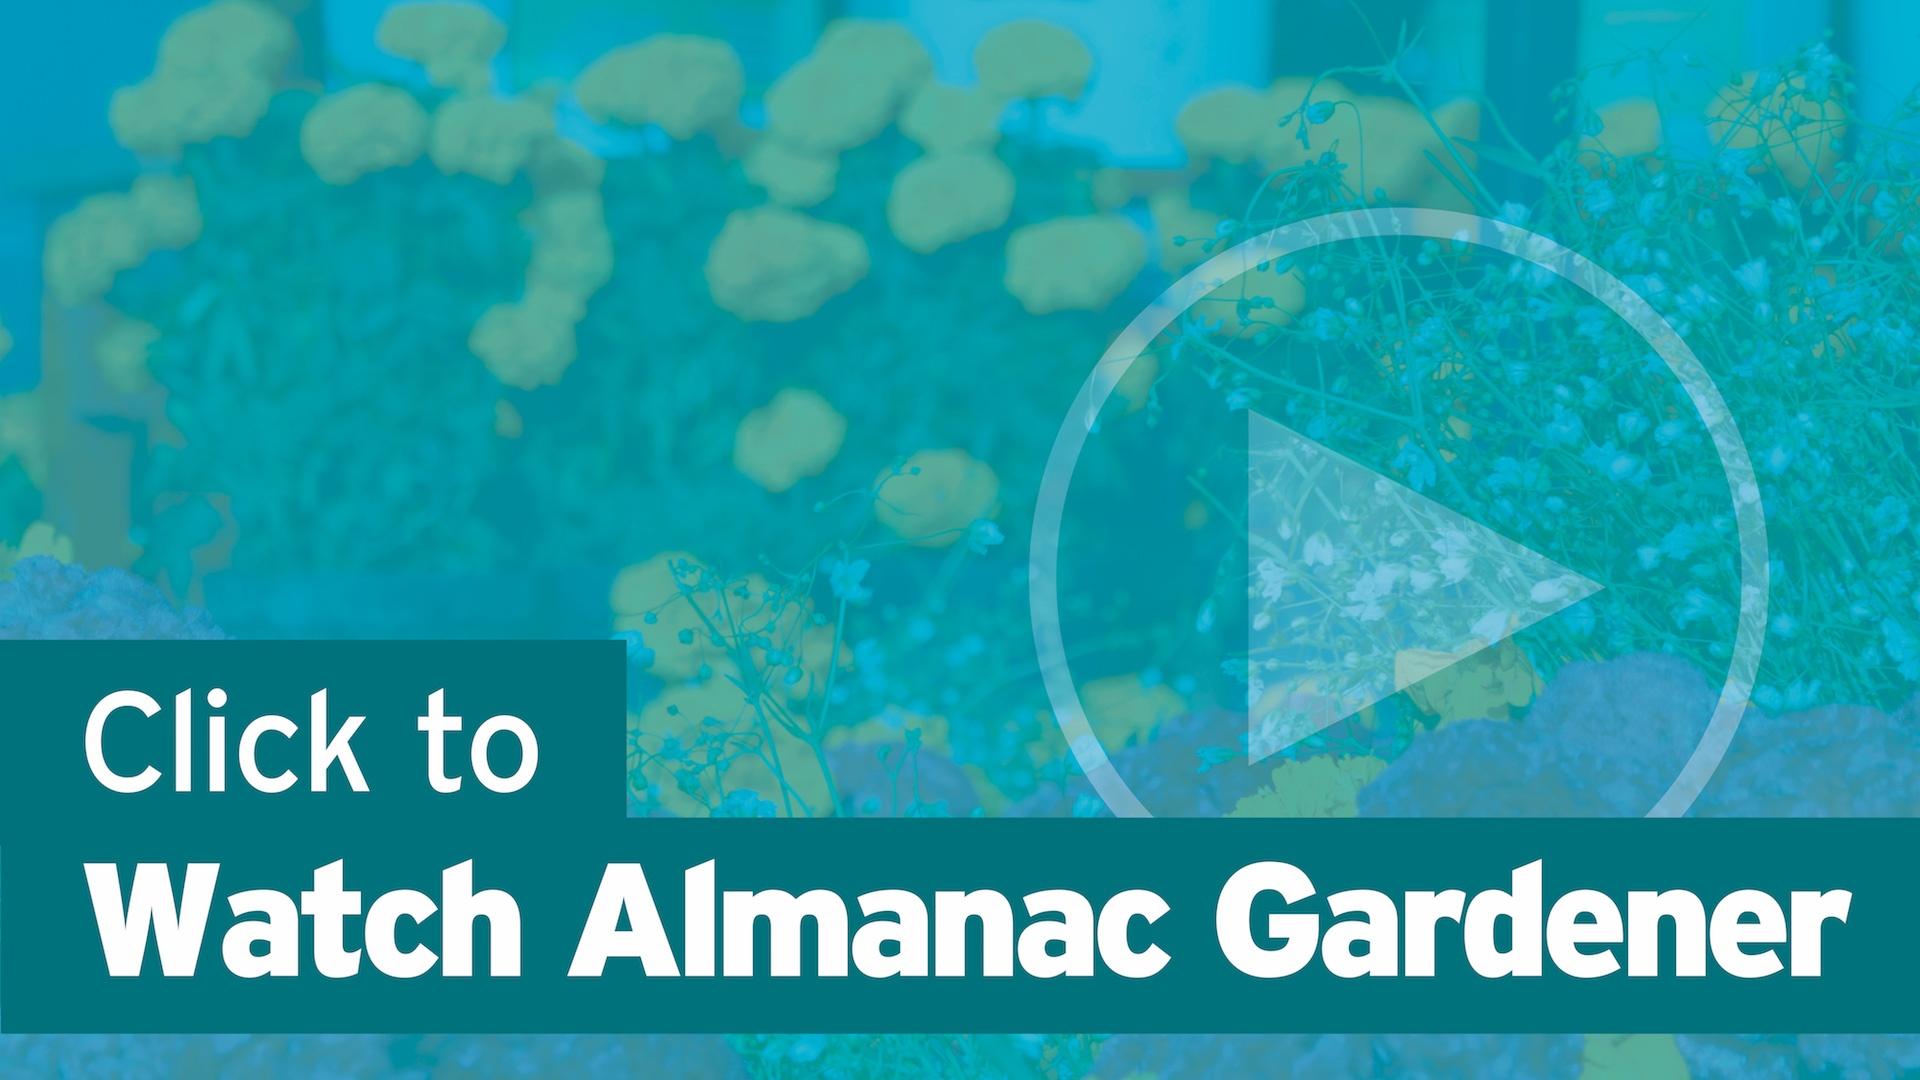 Click Here to Watch Almanac Gardner